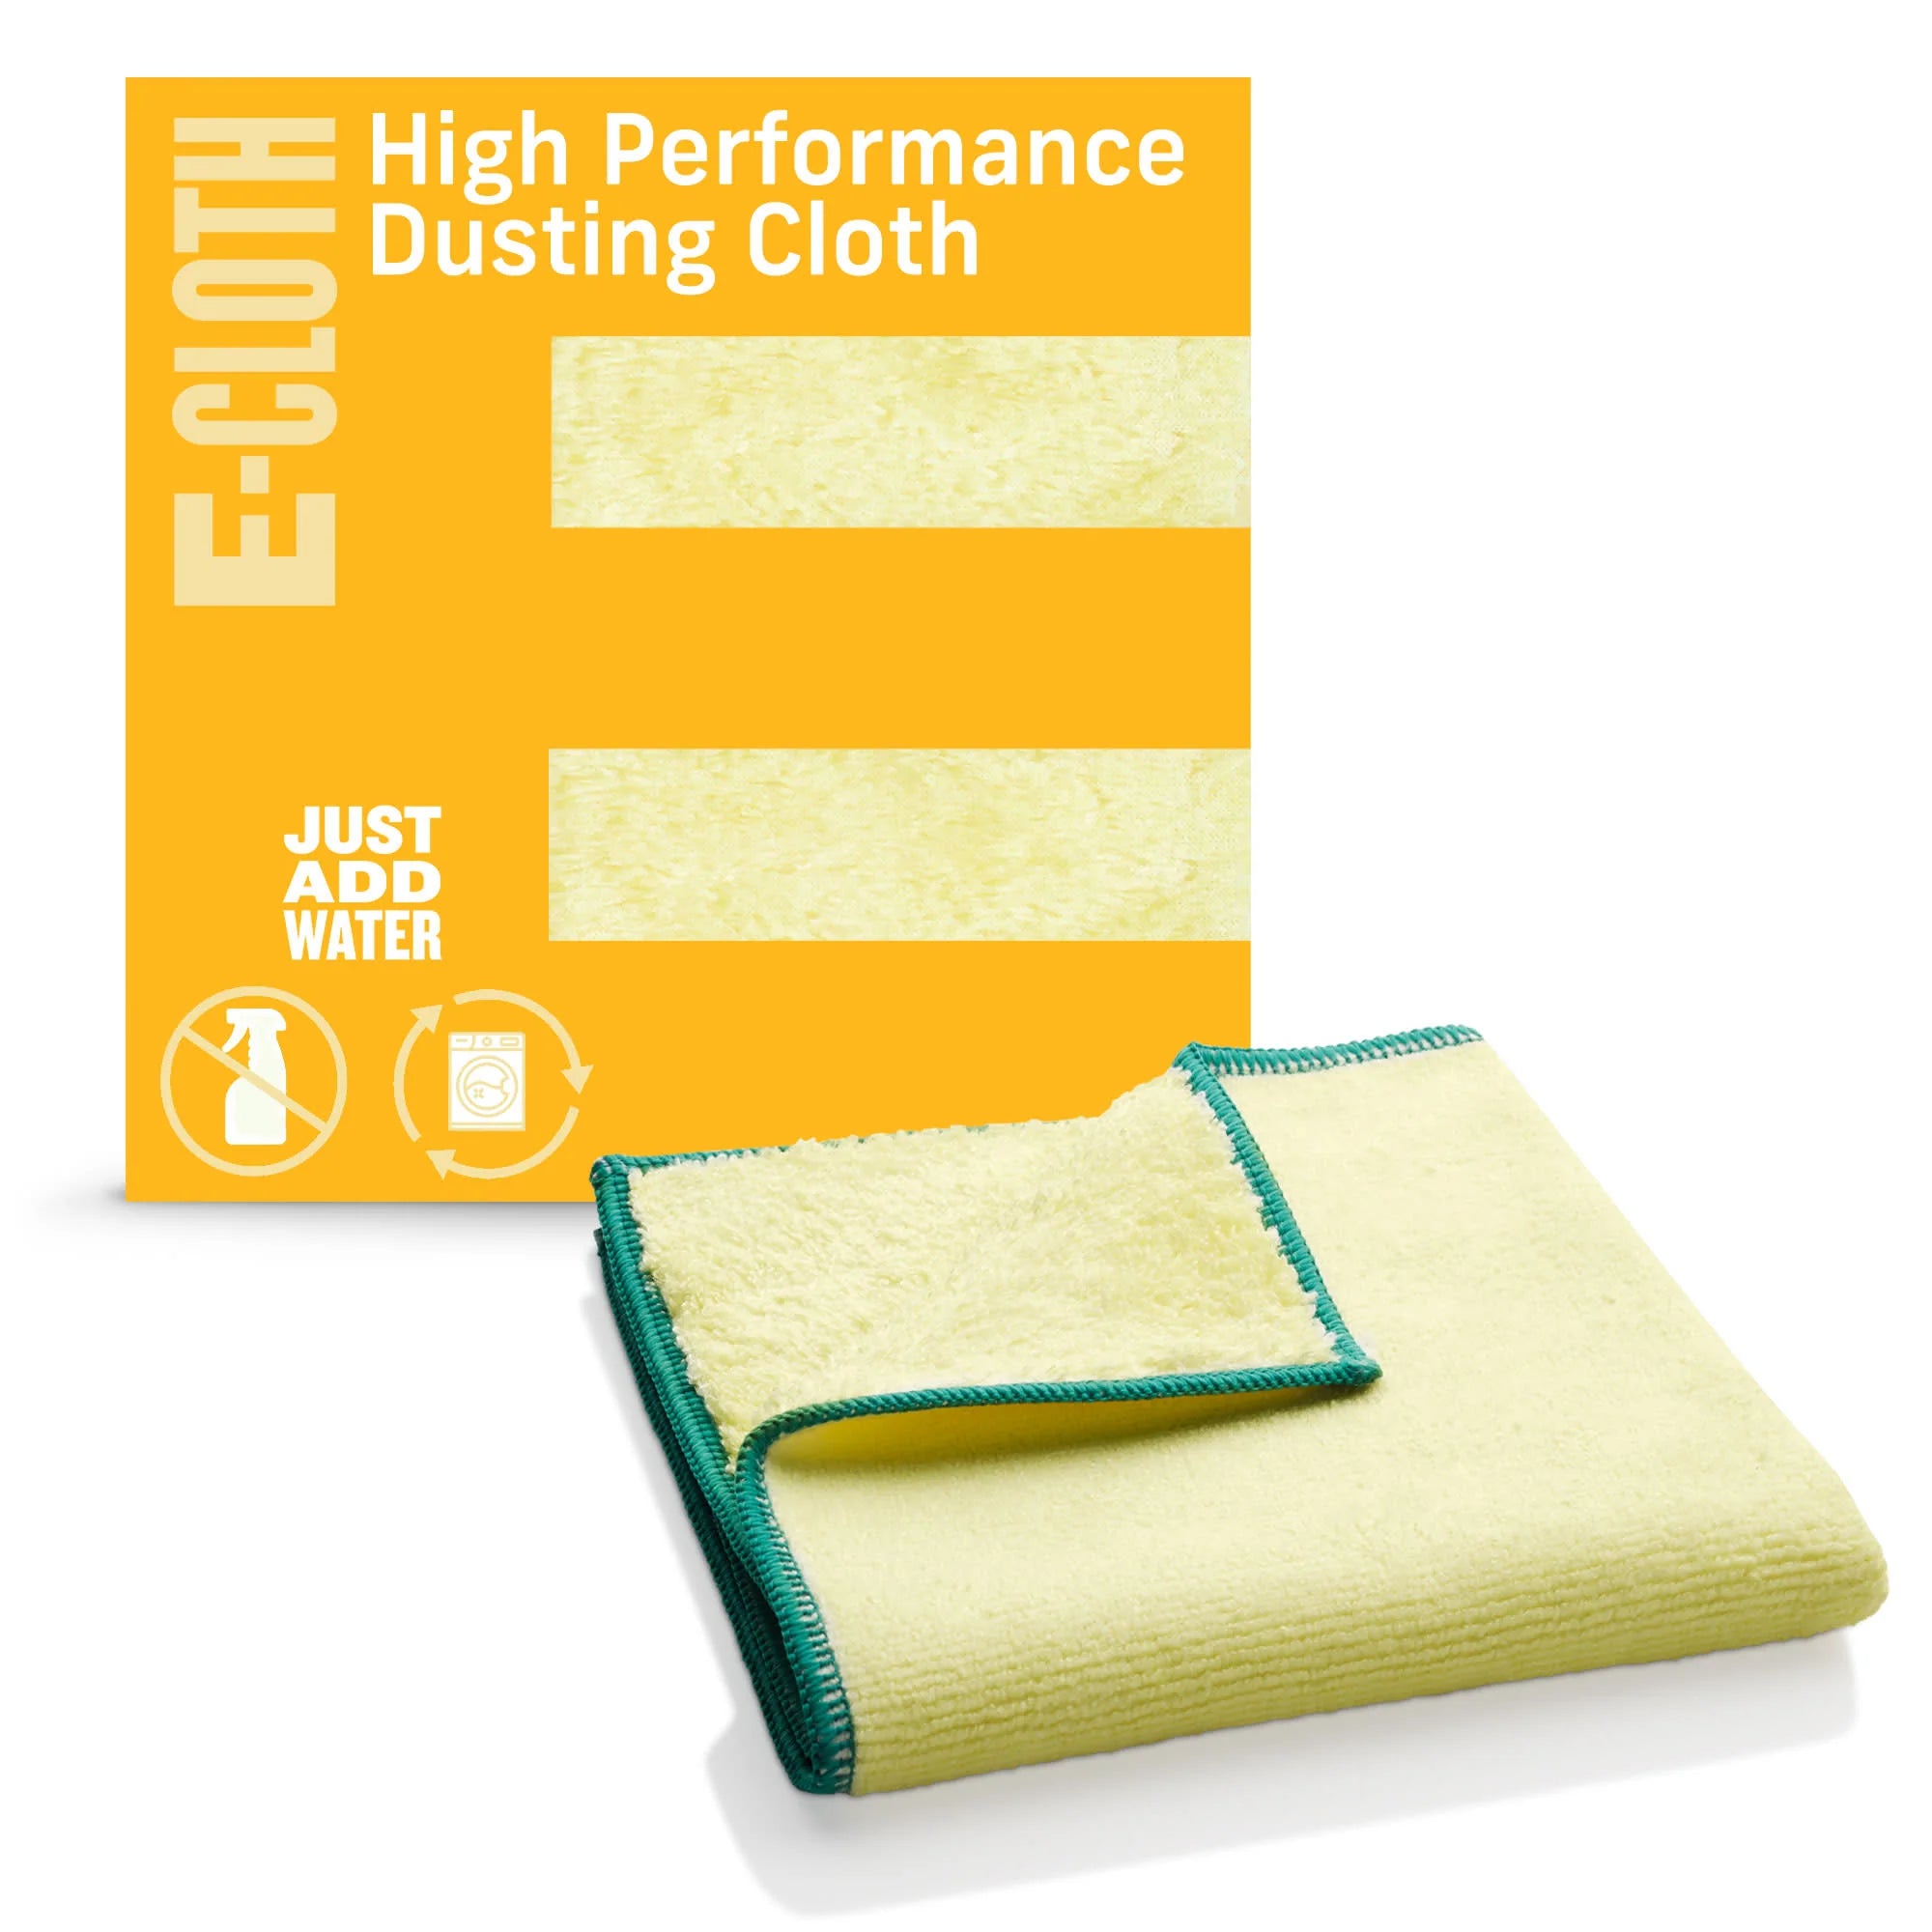 High Performance Dusting Cloth